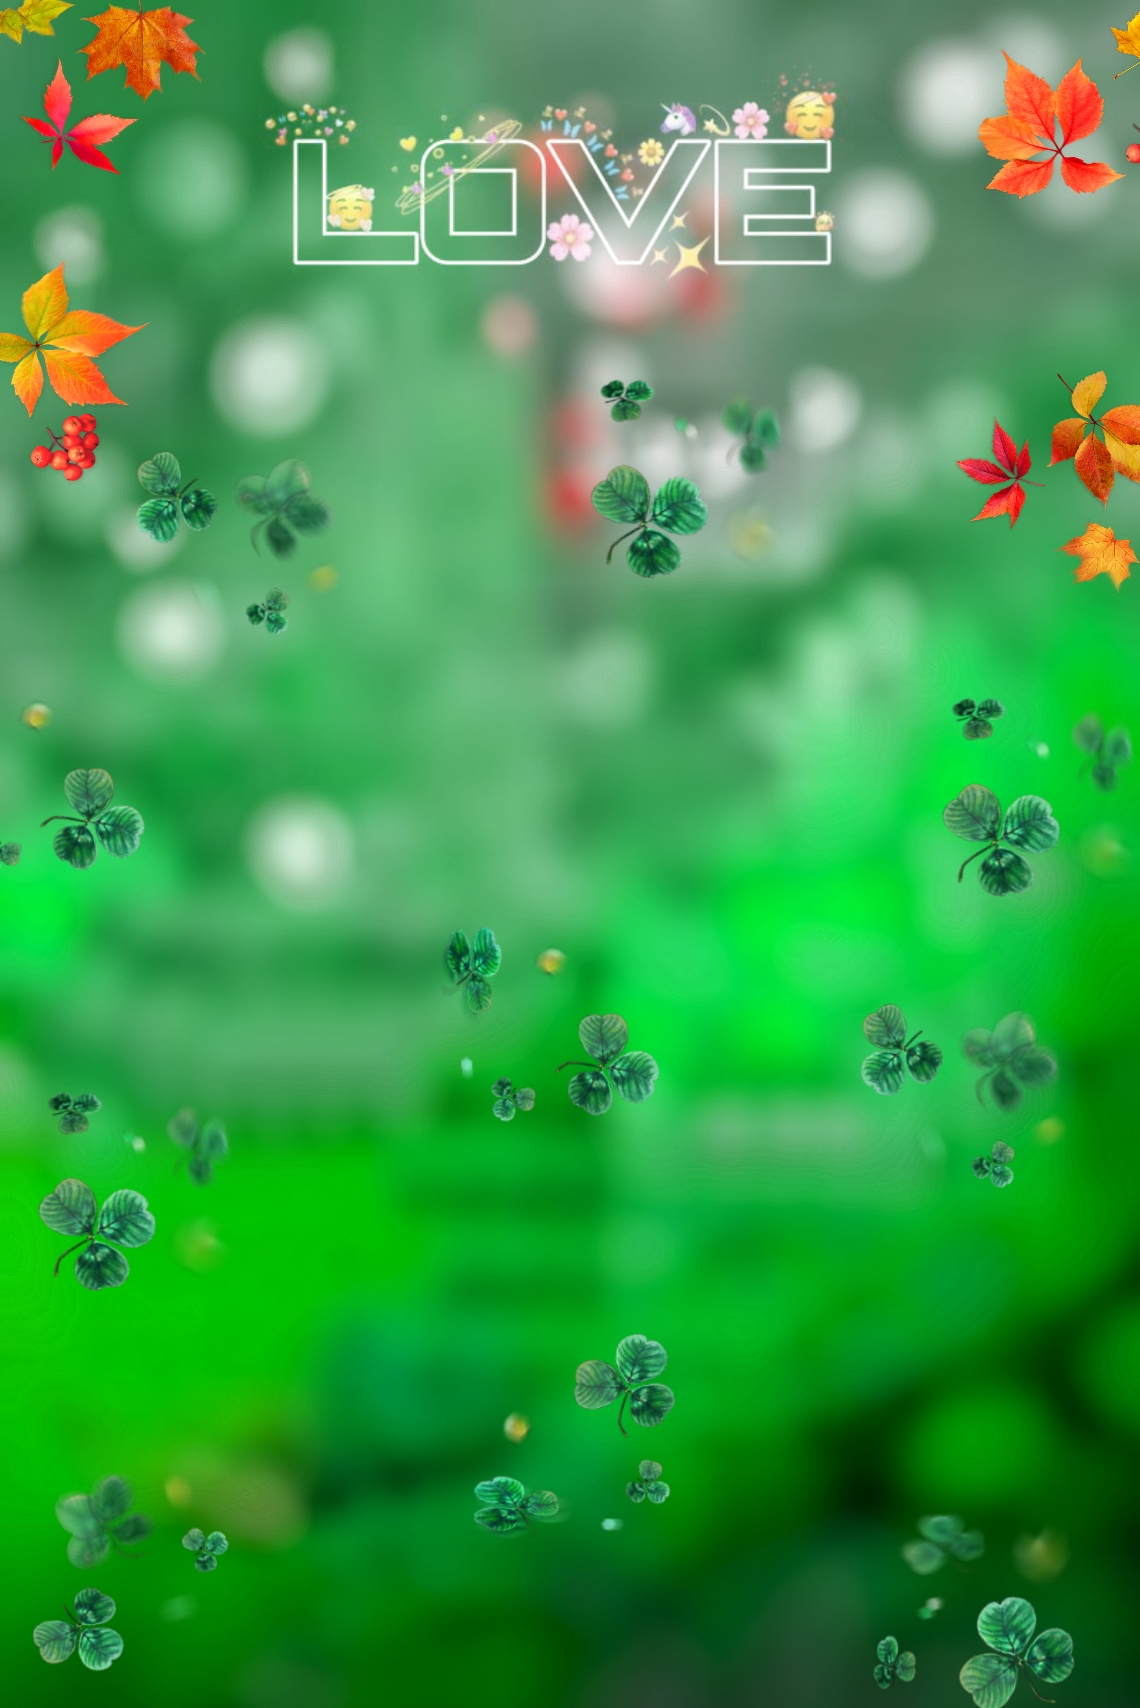 Green Tree Love Editing Background HD Image